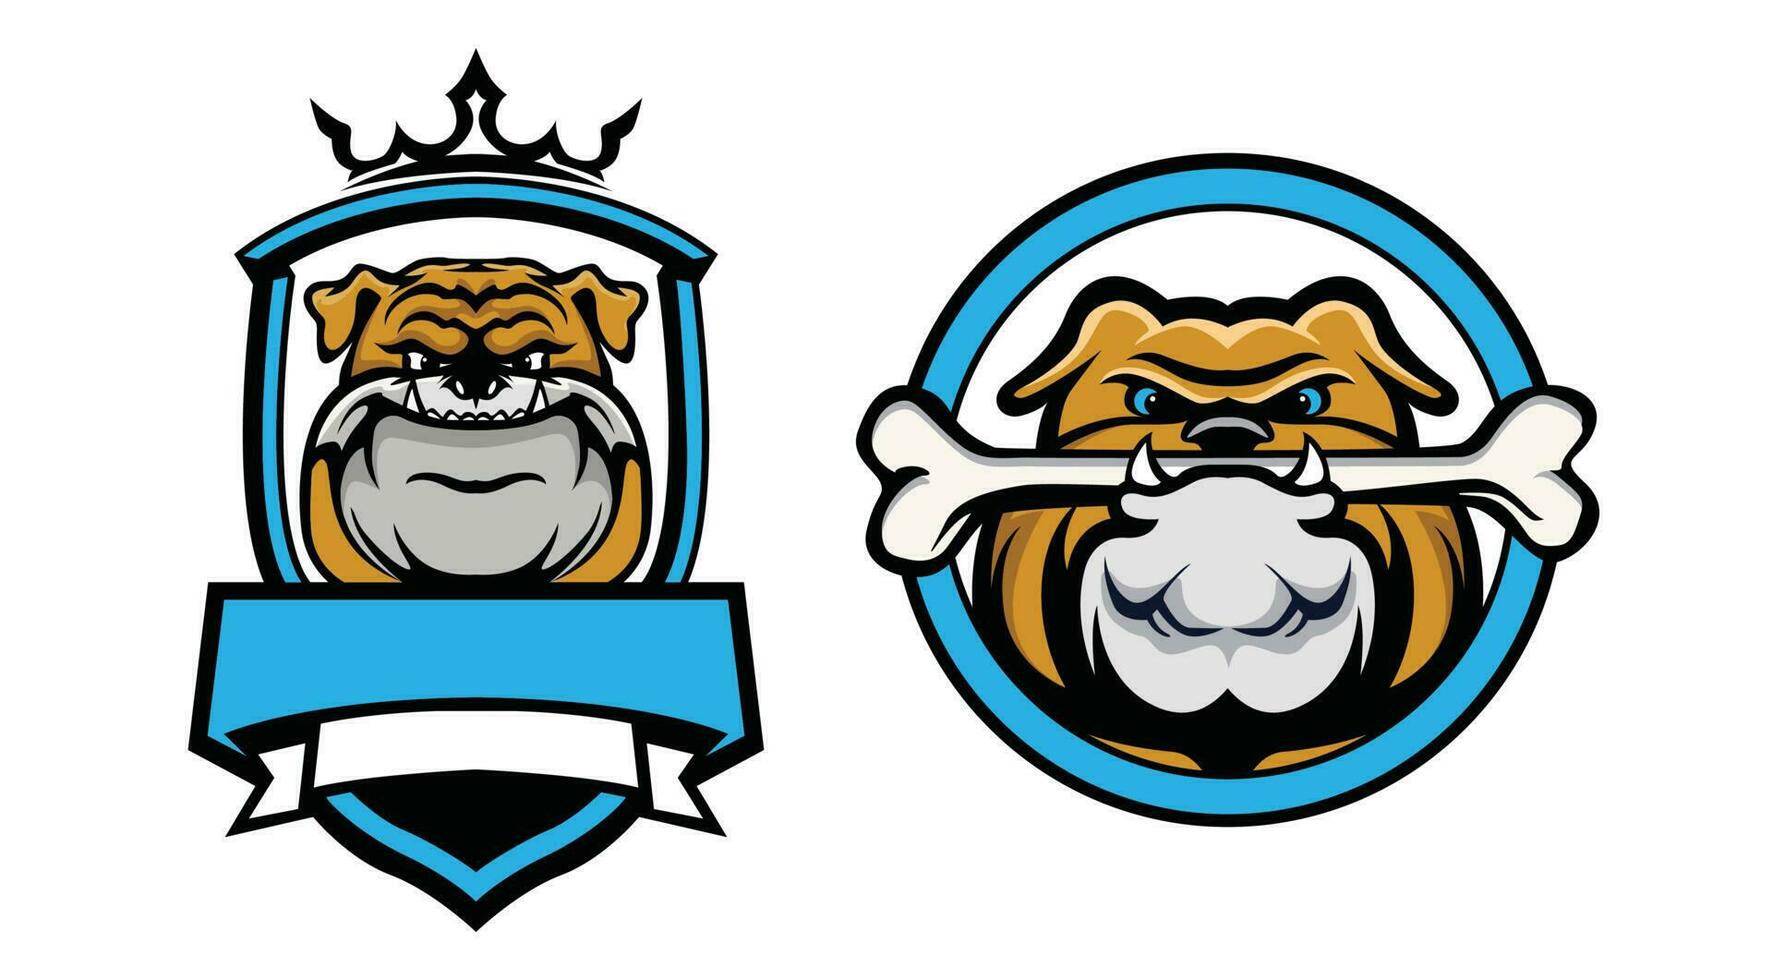 bulldog logo ontwerp voor esport team. bulldog logo insigne embleem. vector